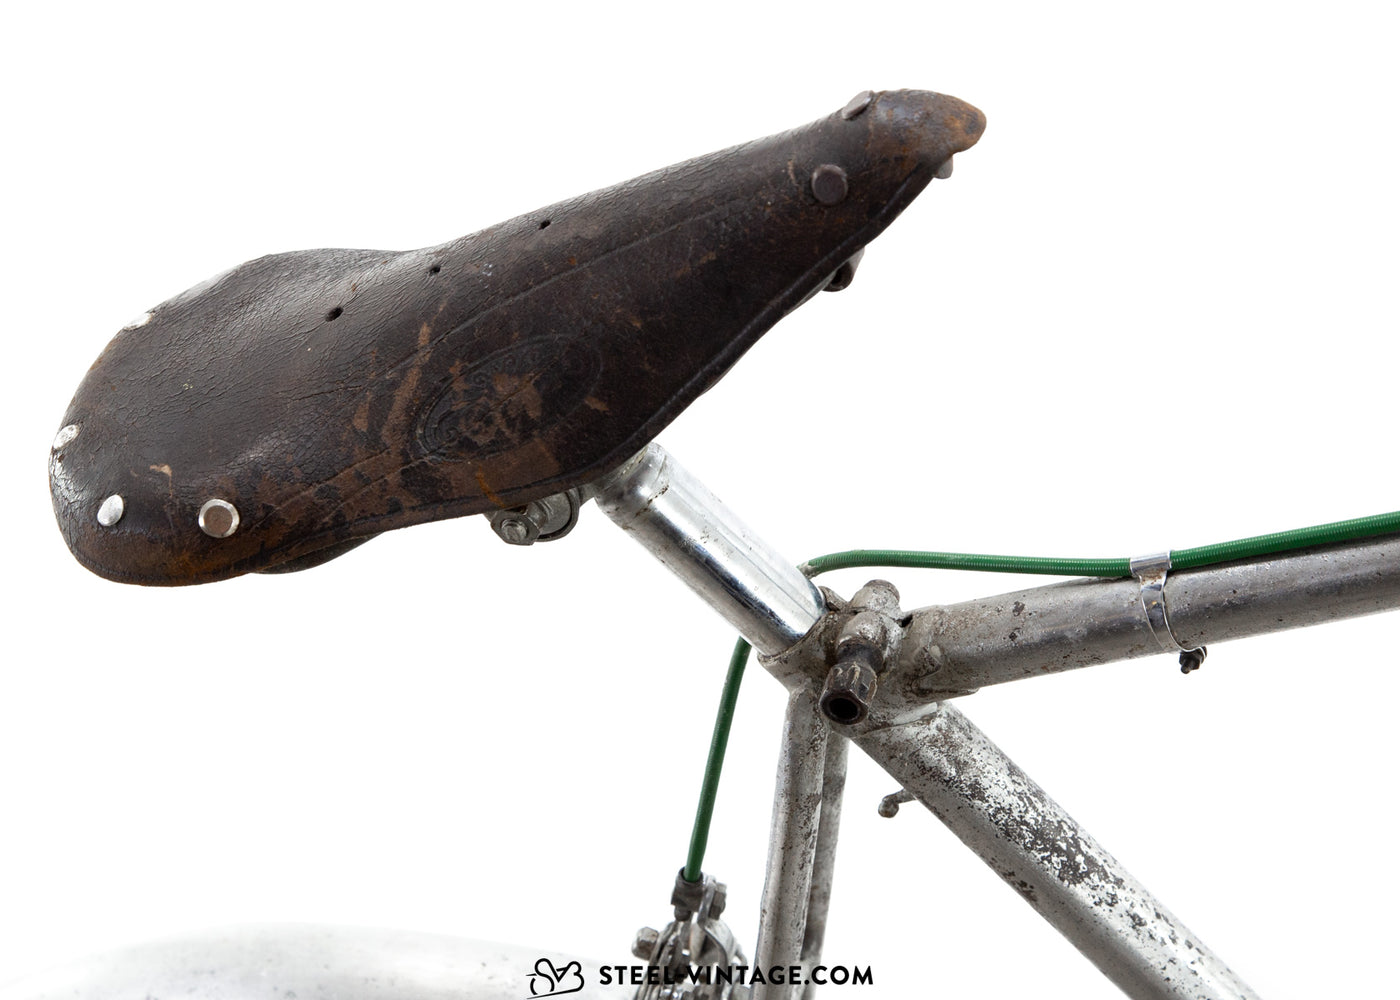 C. Soncini Italian Suspension Bike 1940s